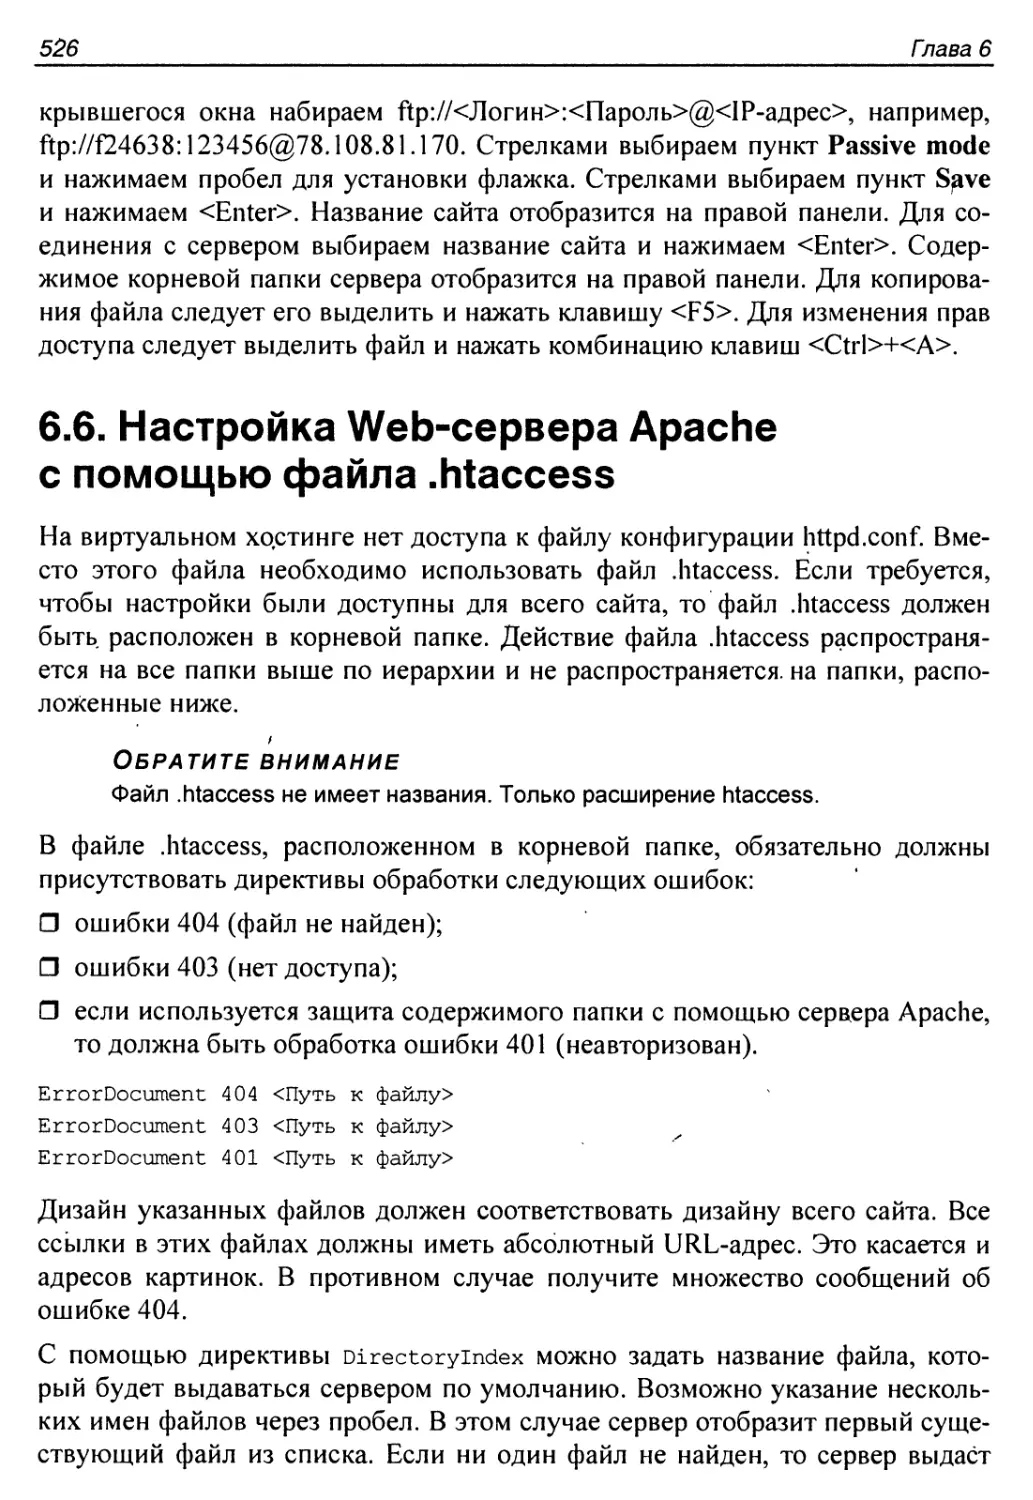 6.6. Настройка Web-сервера Apache с помощью файла .htaccess